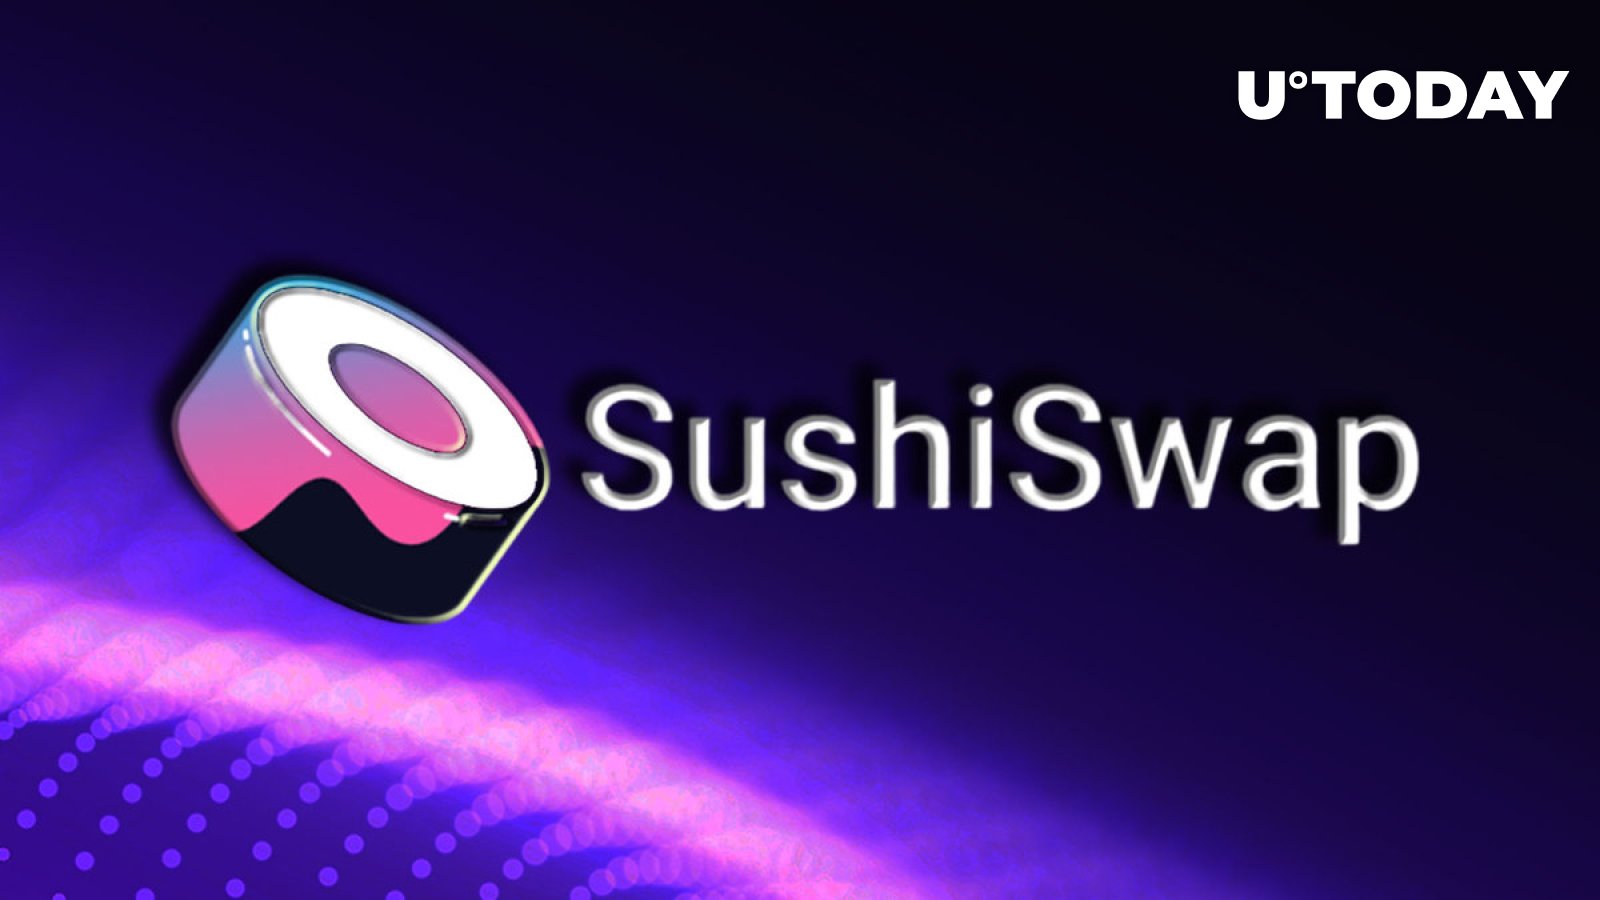 Sushi swap. Sushiswap. Vortex биржа. Sushiswap PNG.